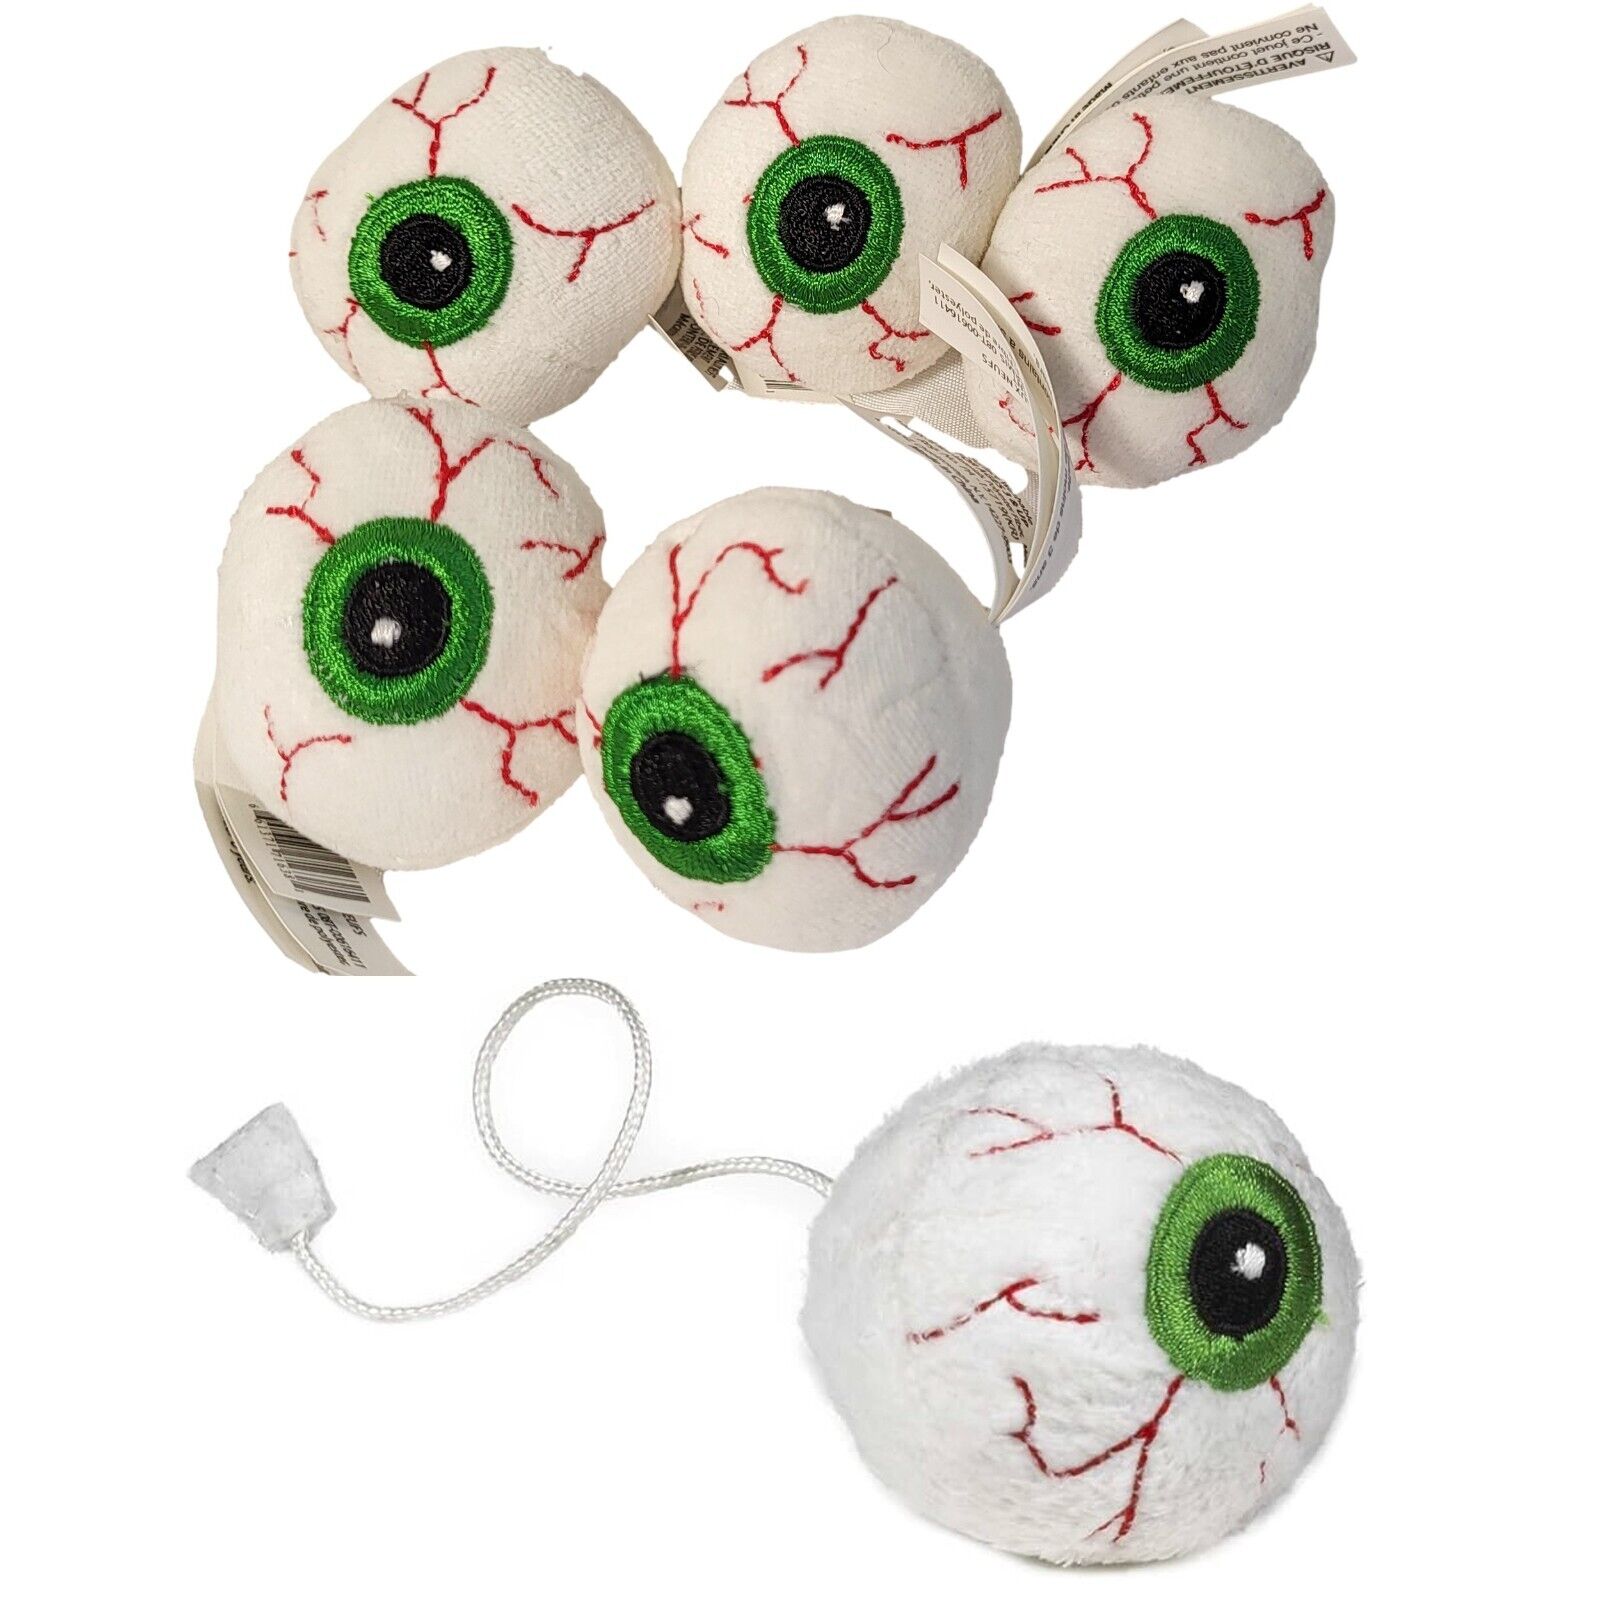 Halloween Eyeball Go Go's Plush Toys 6-Pack Pull String Props Party Favors